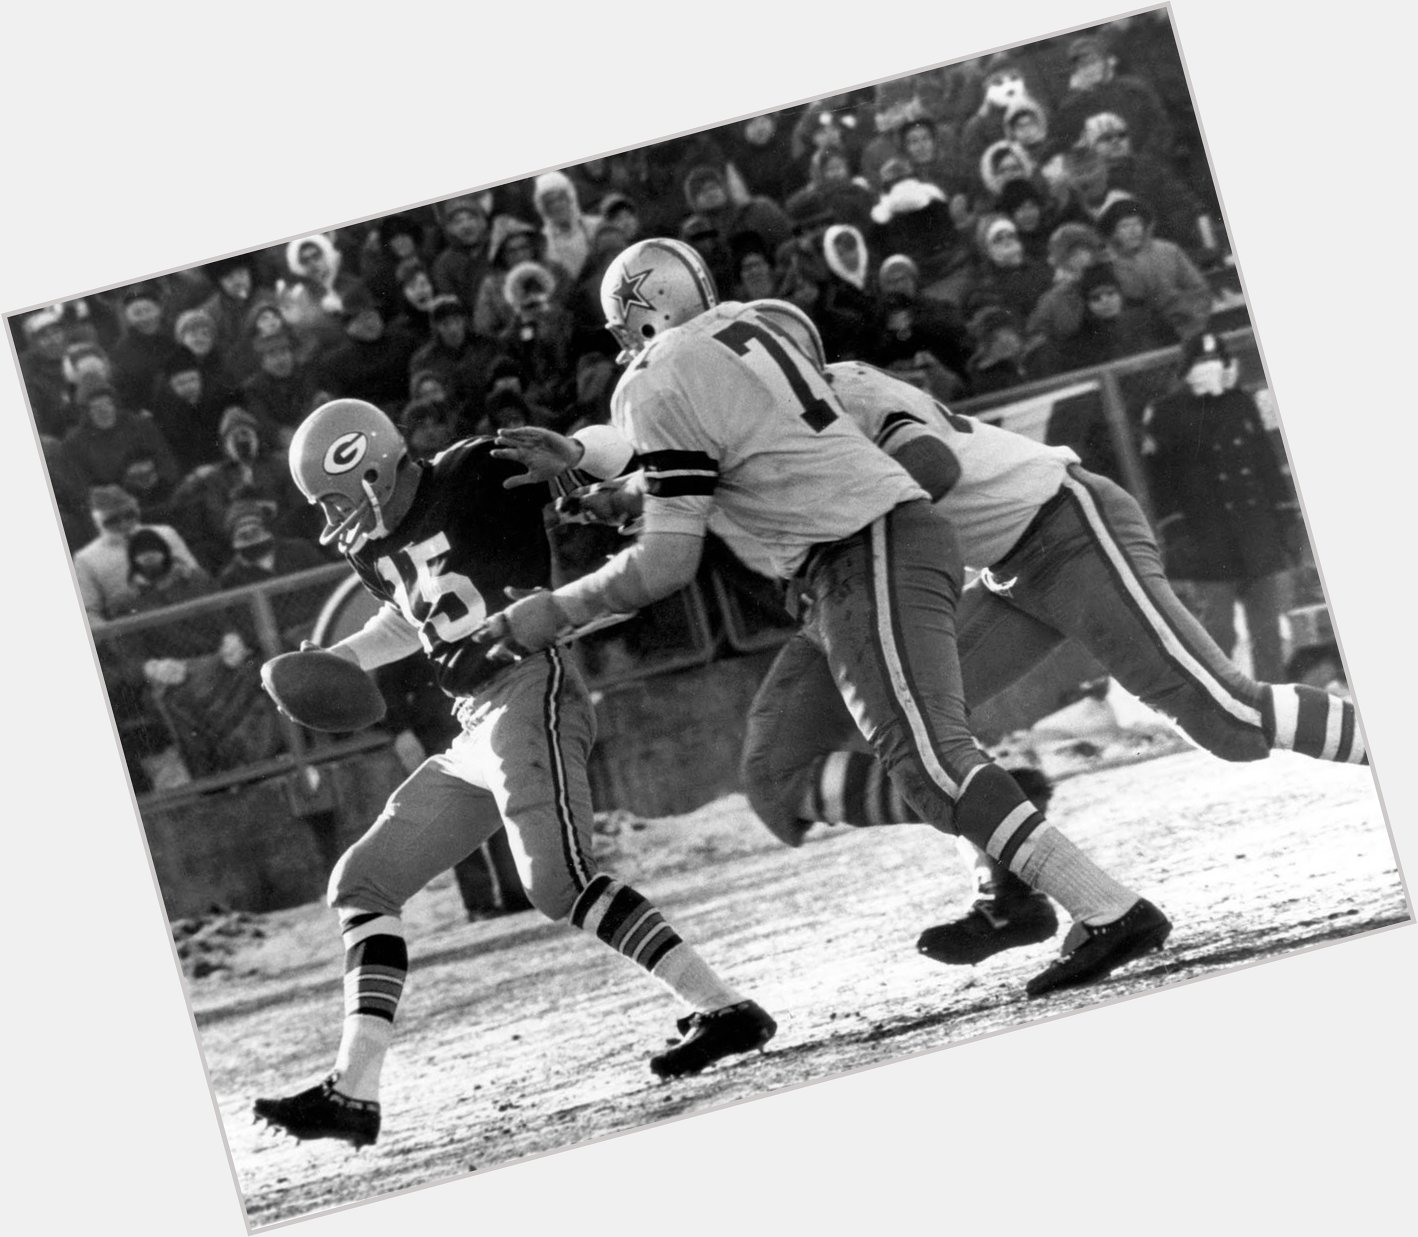 Happy birthday 81st birthday to Packers legend Bart Starr! Make him proud on Sunday 